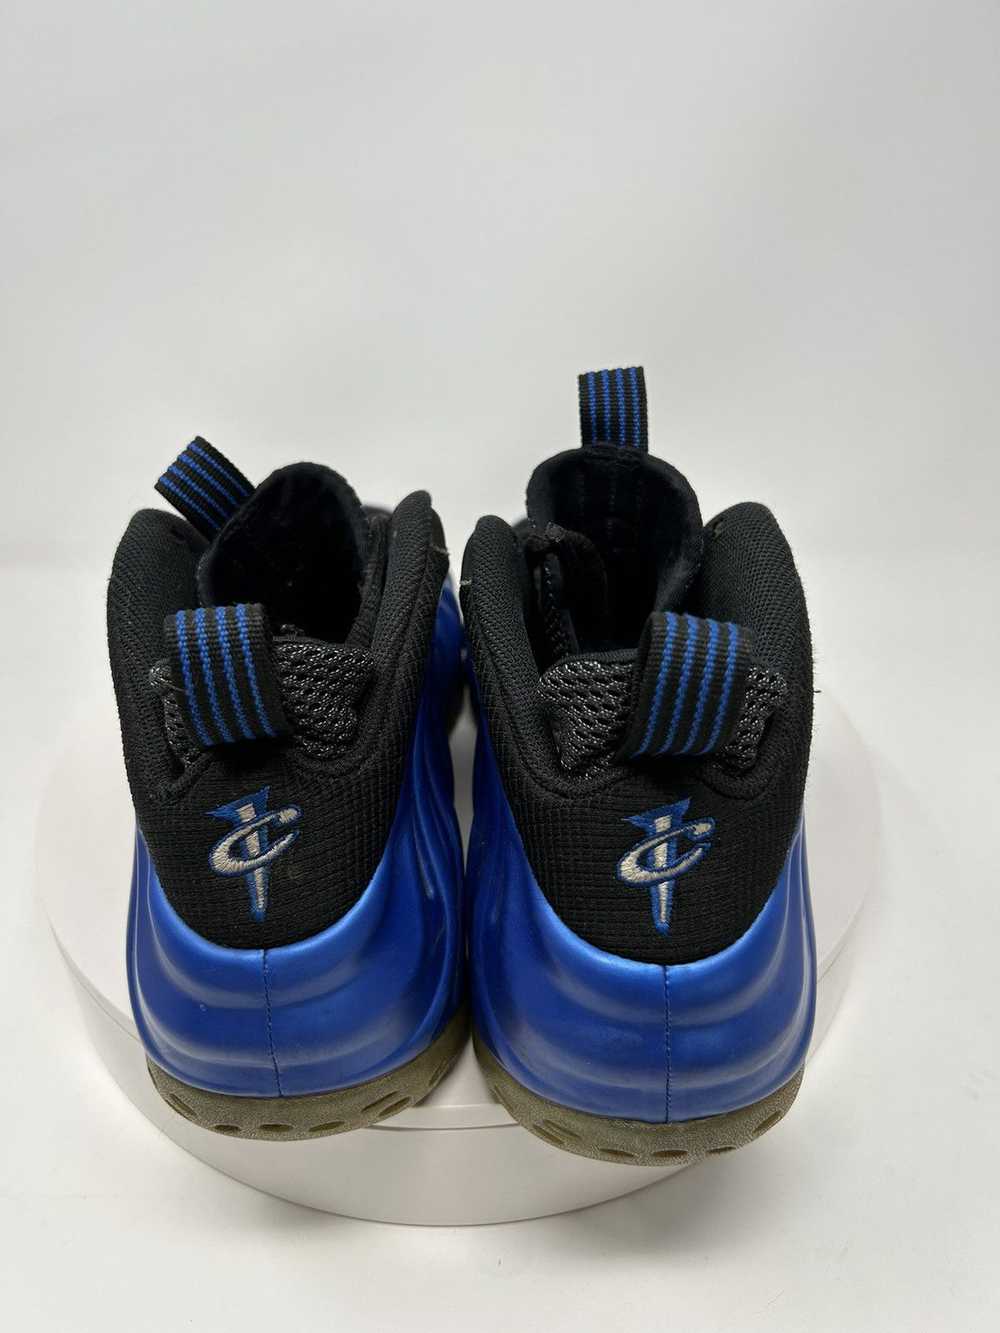 Nike Royal blue foamposites 9.5 - image 3